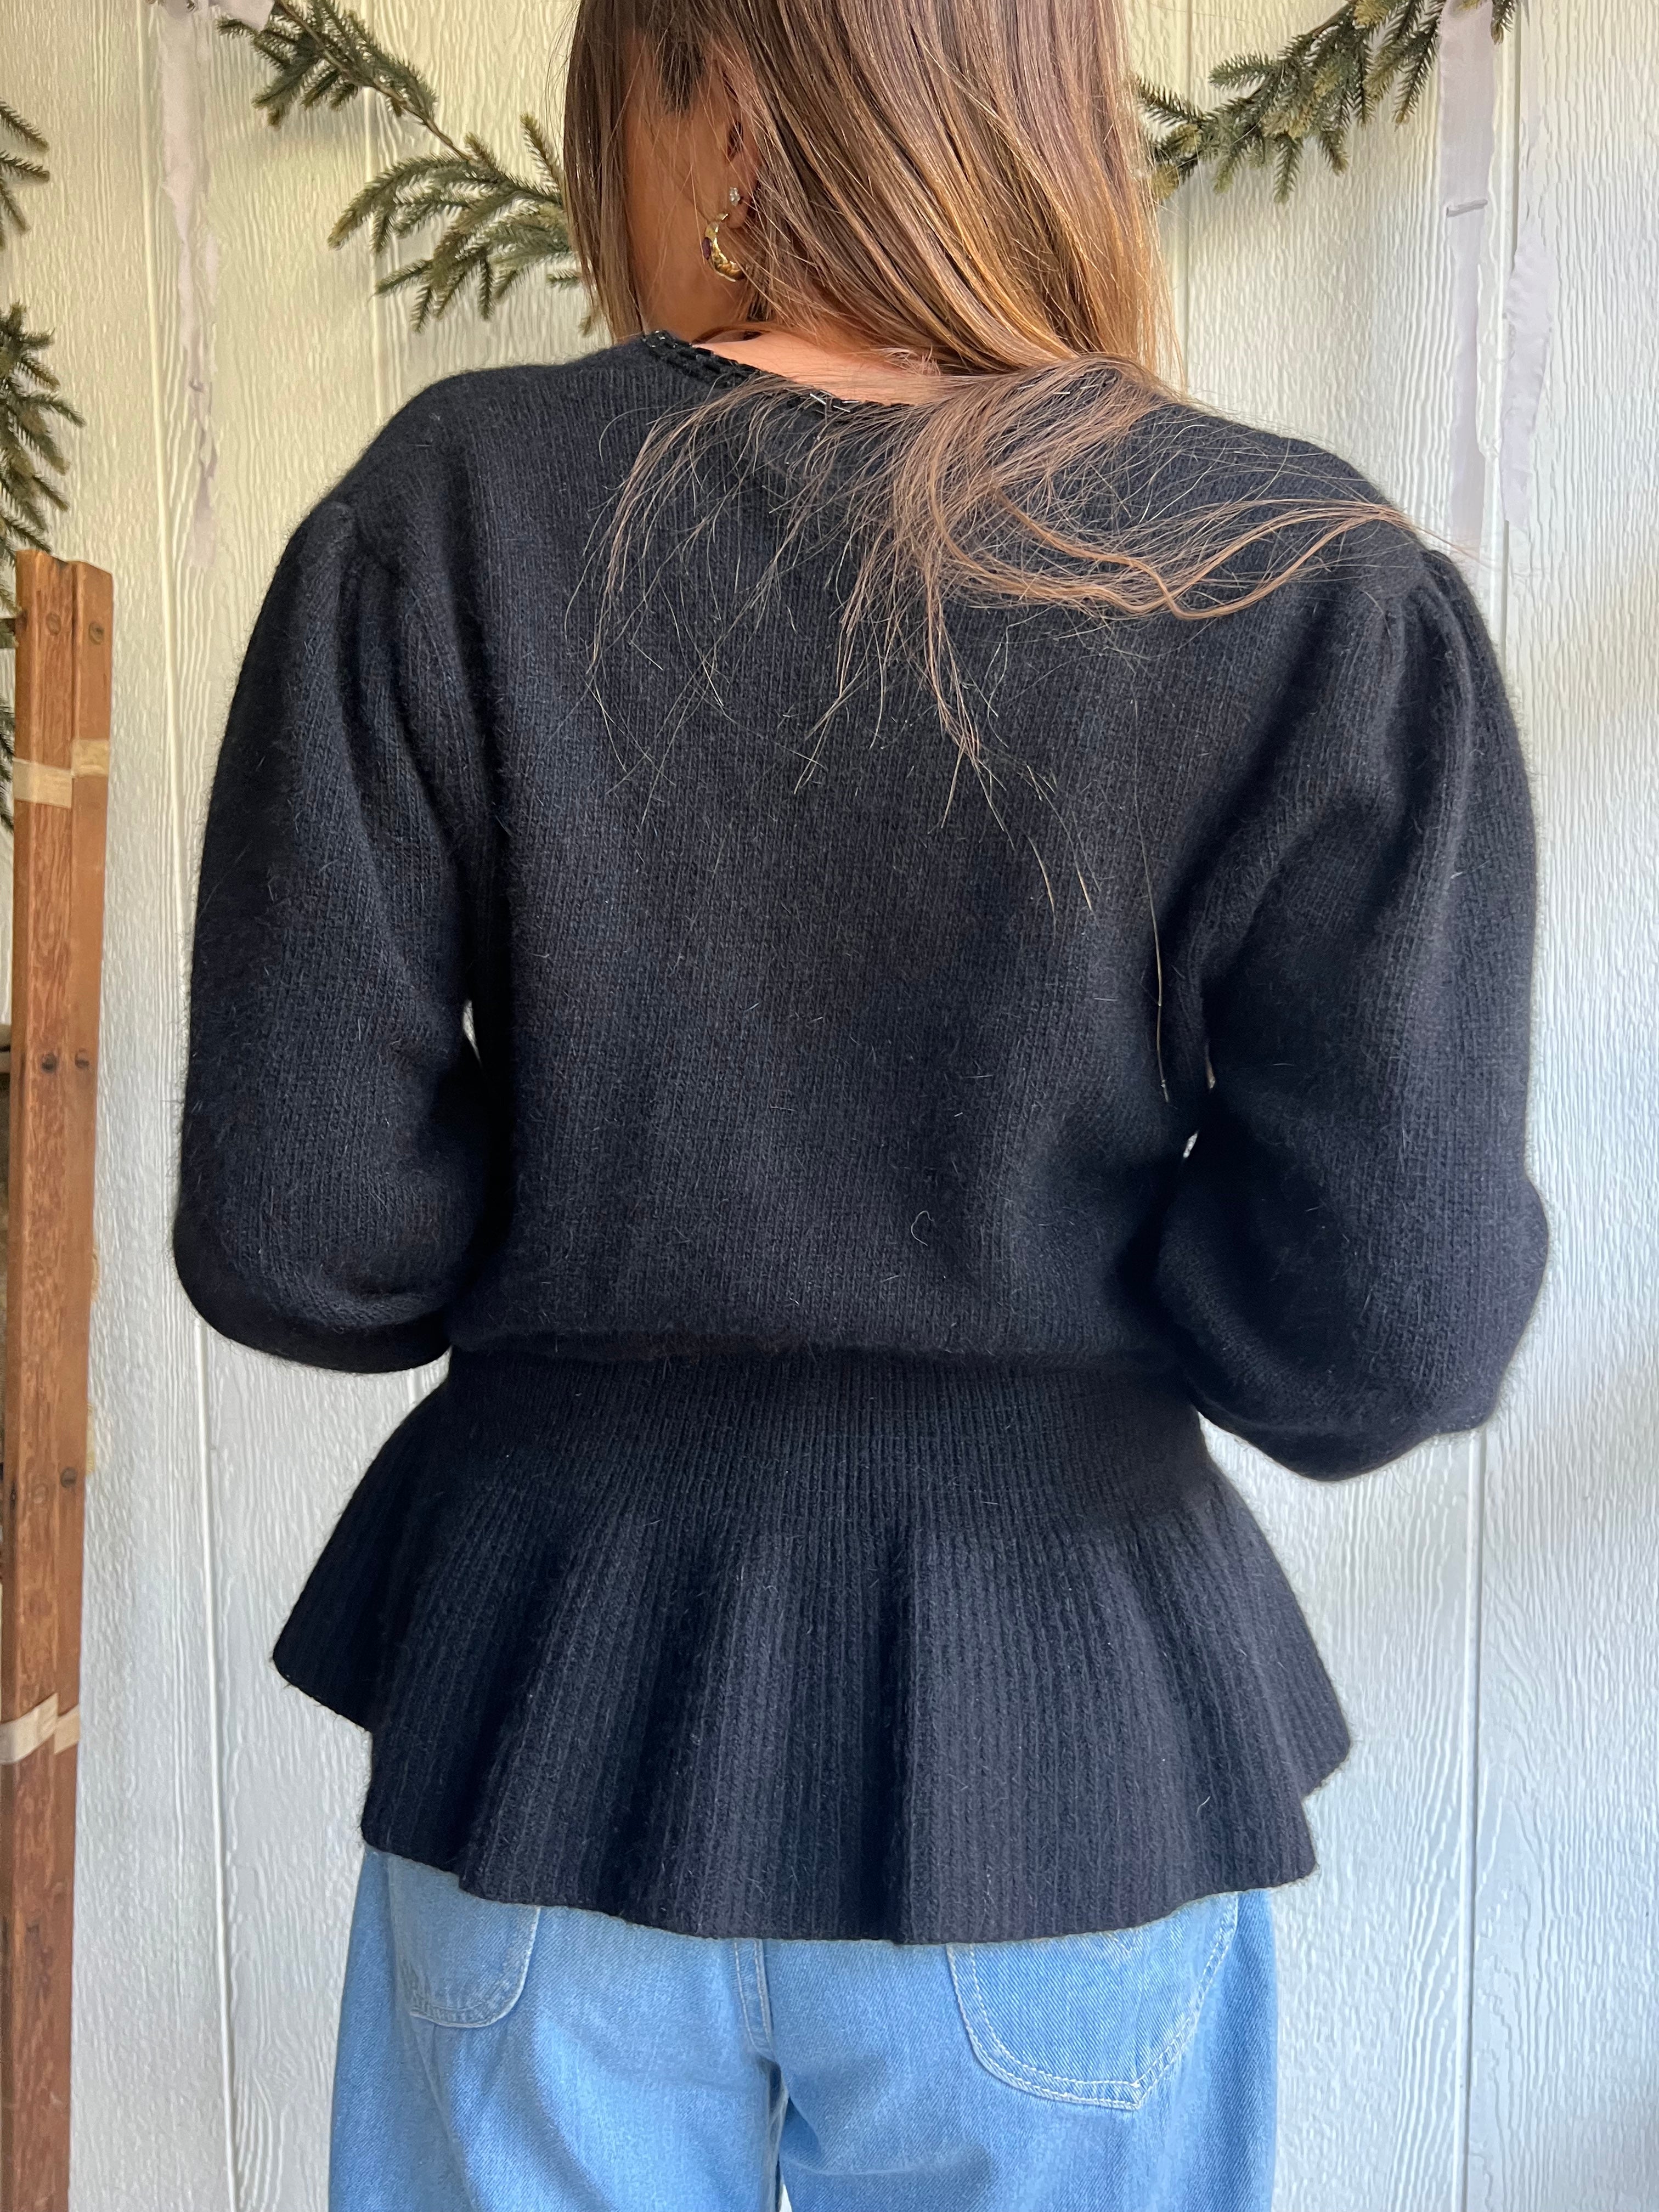 Black Angora Wool Sweater